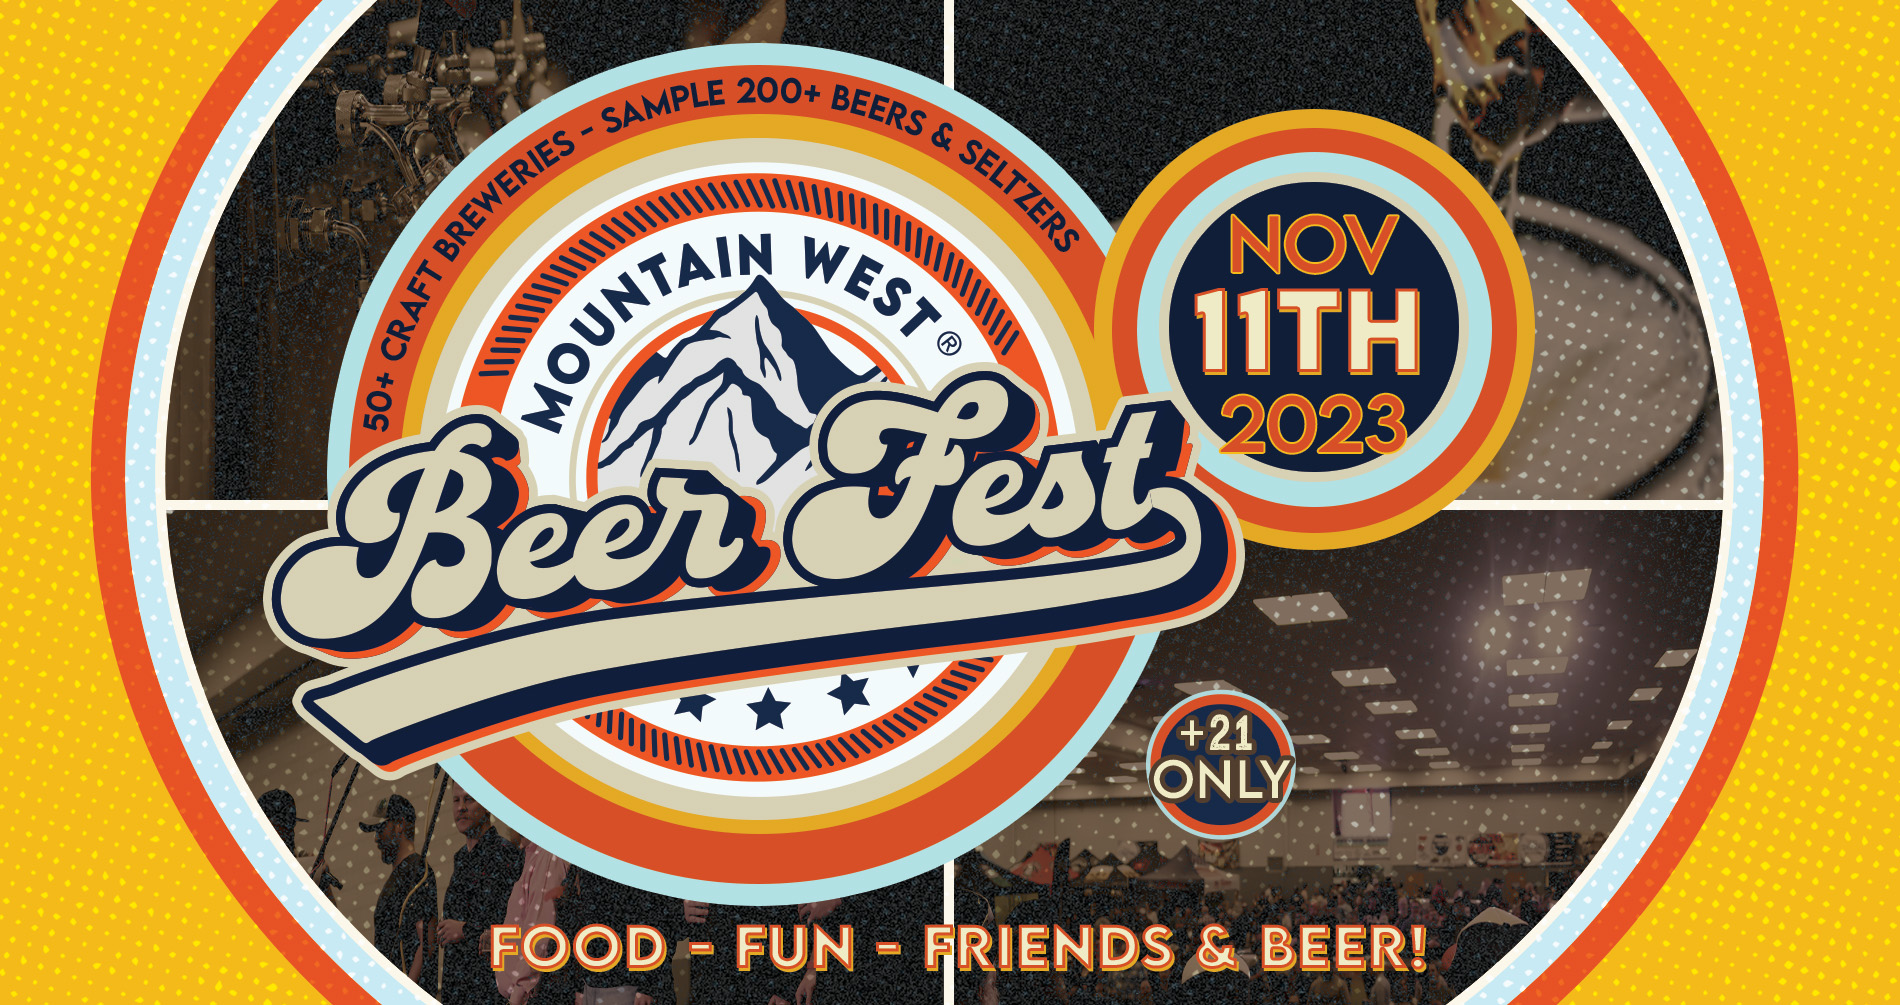 Mountain West Beer Fest banner image